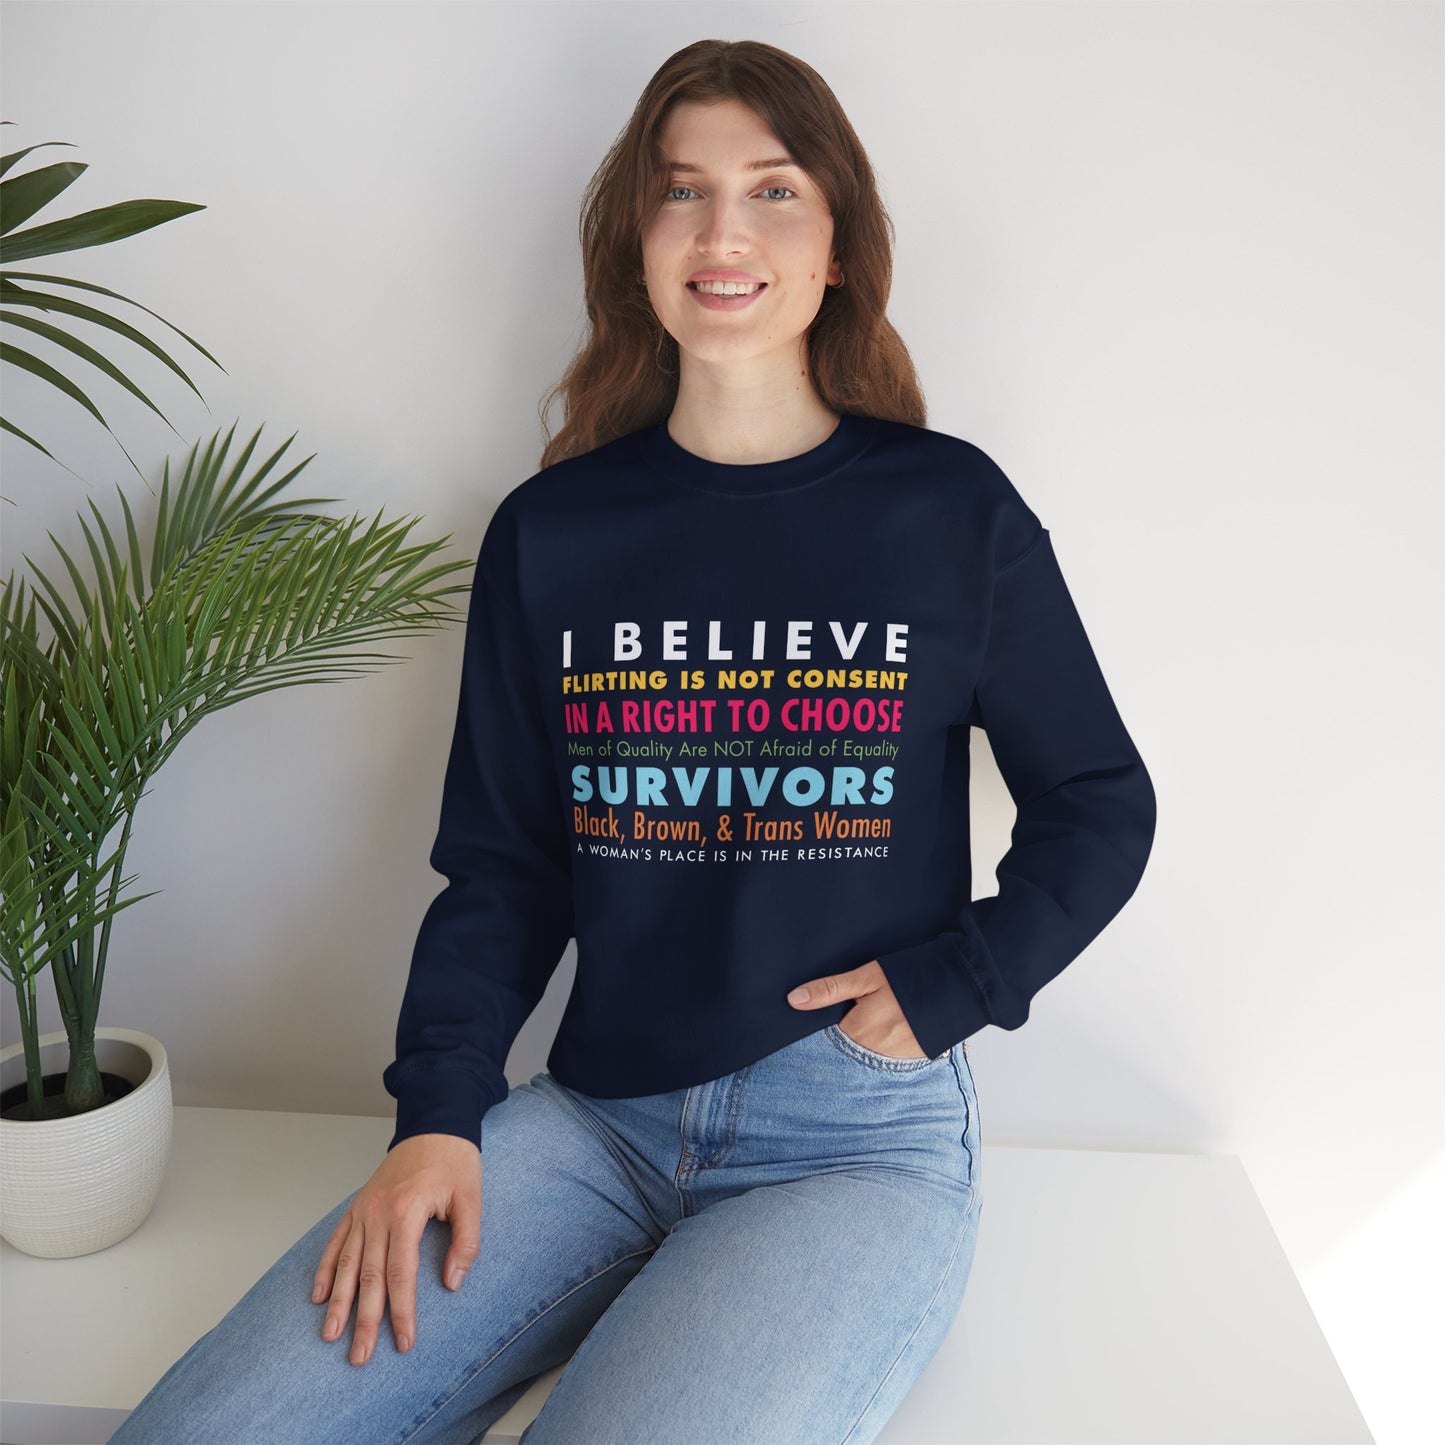 “I/We Believe Women” Unisex Sweatshirt